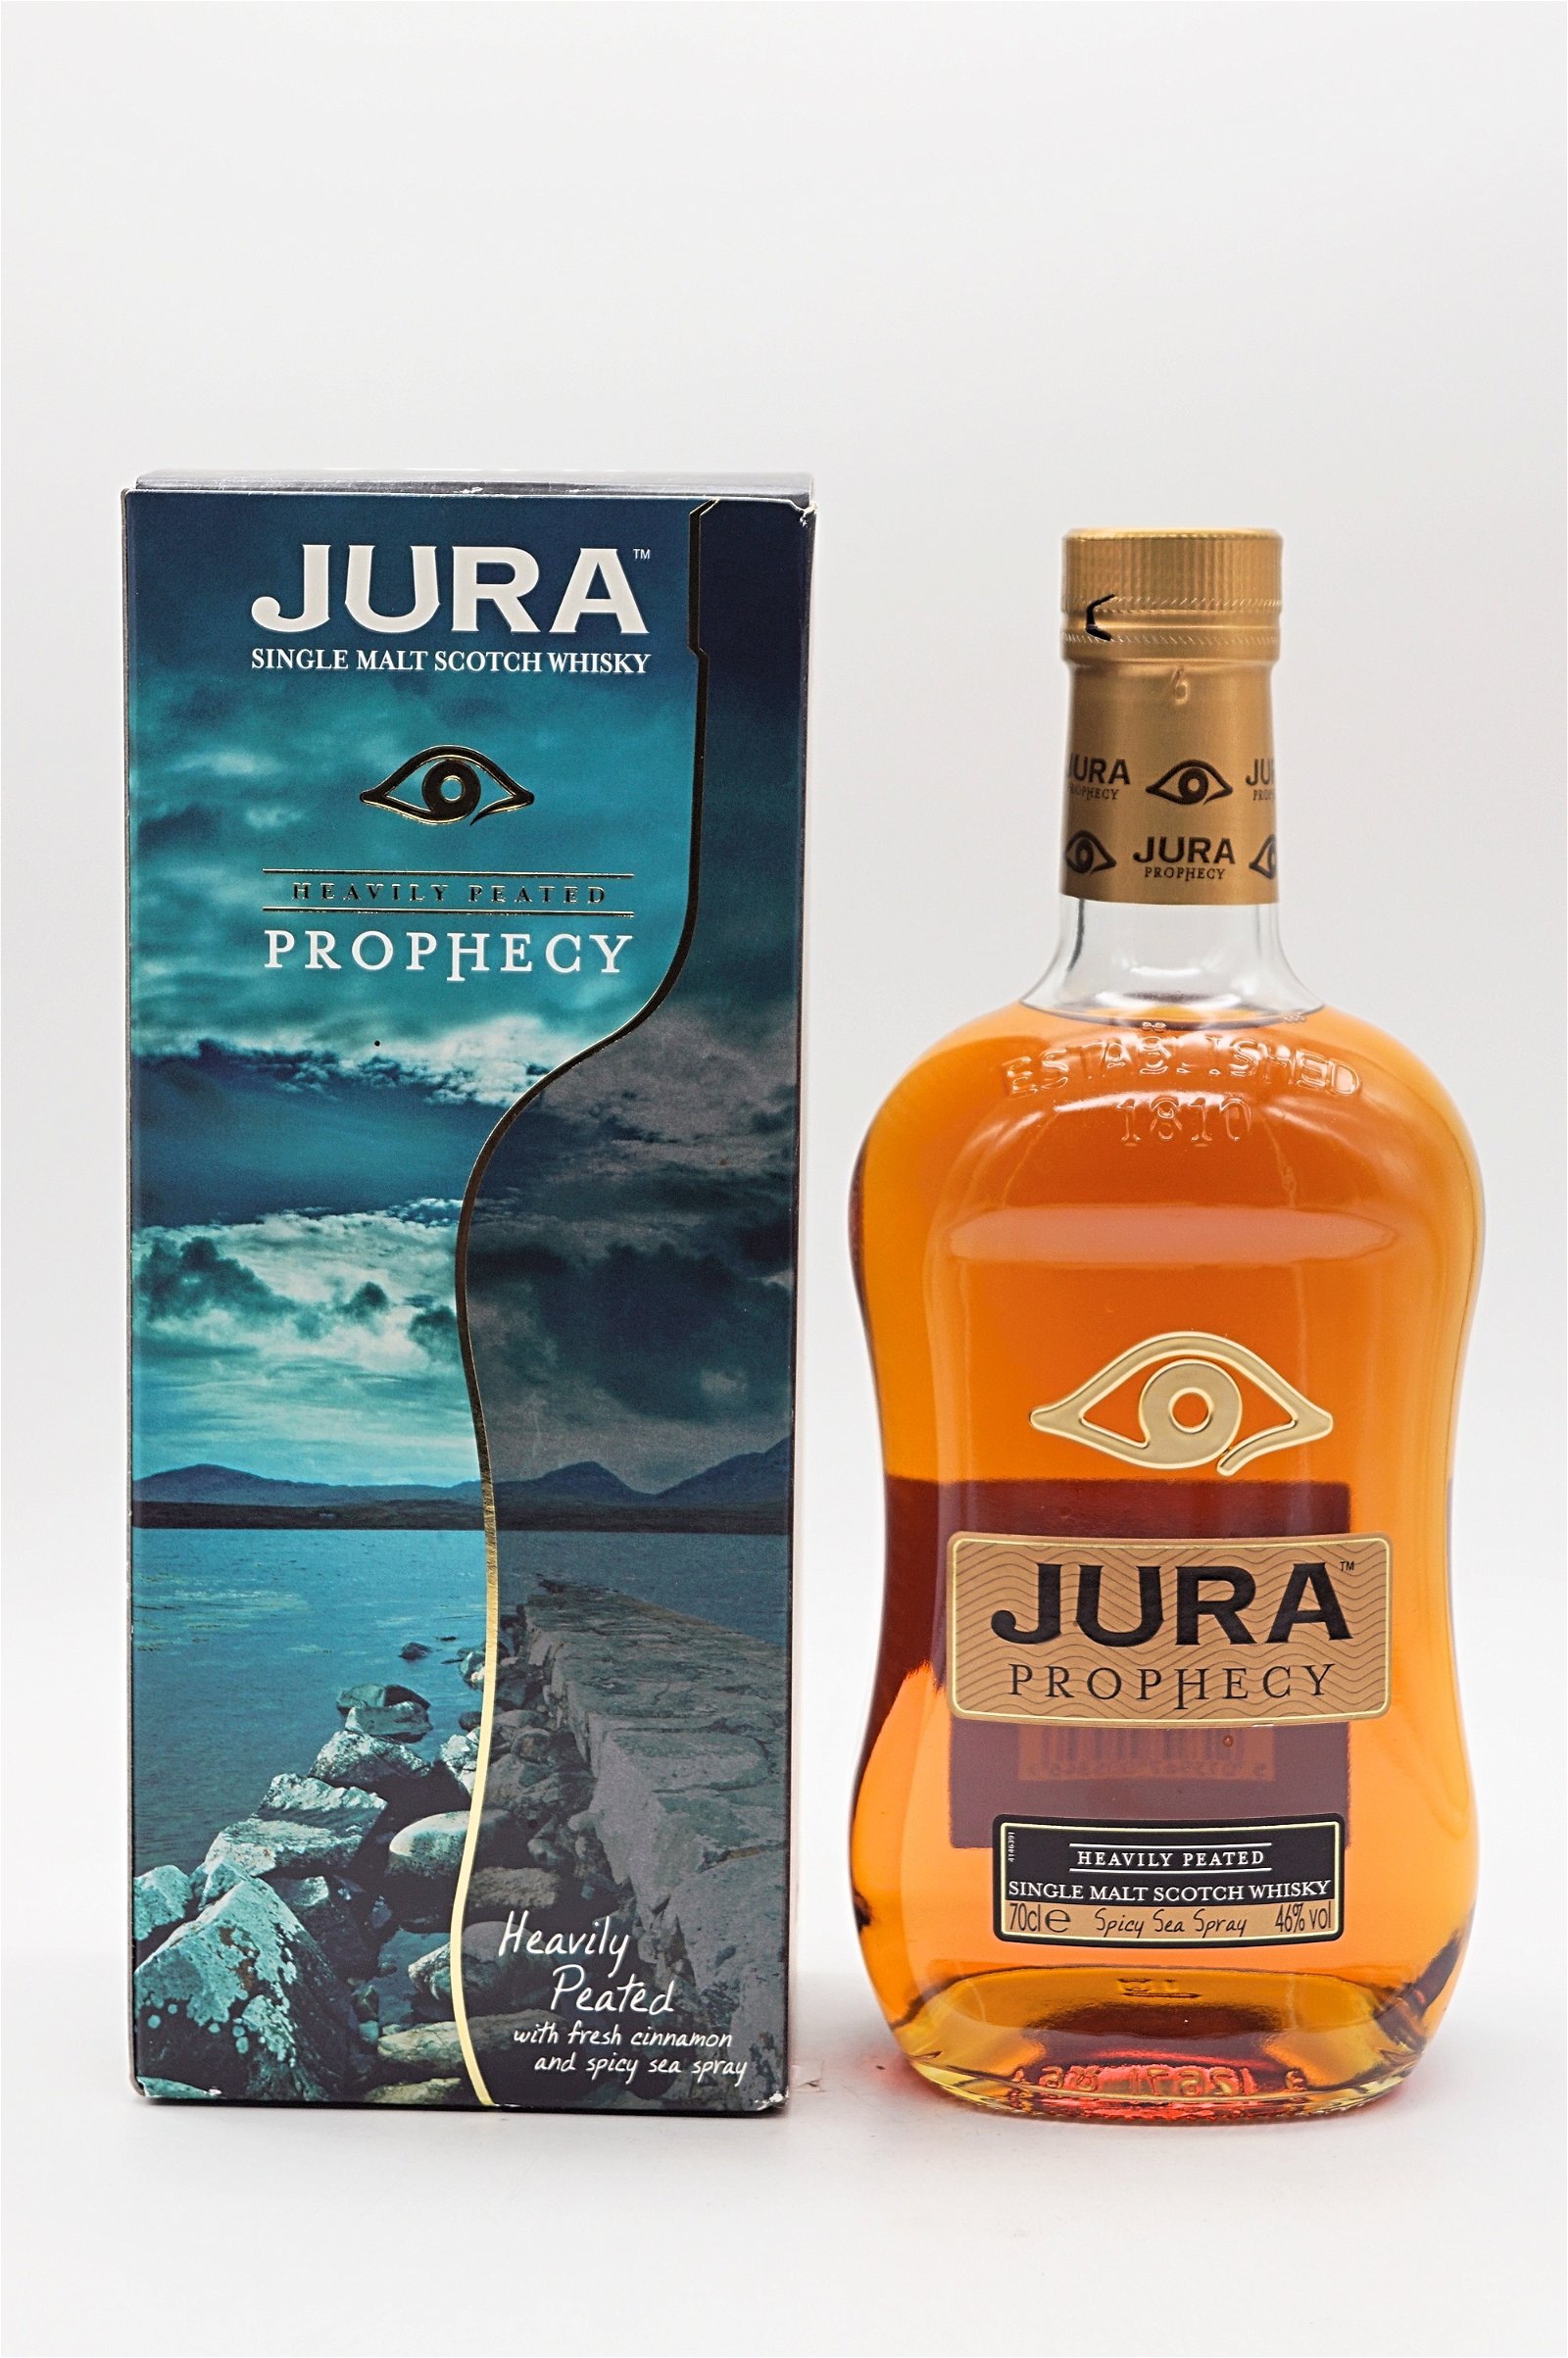 Jura Prophecy Heavily Peated Single Malt Scotch Whisky